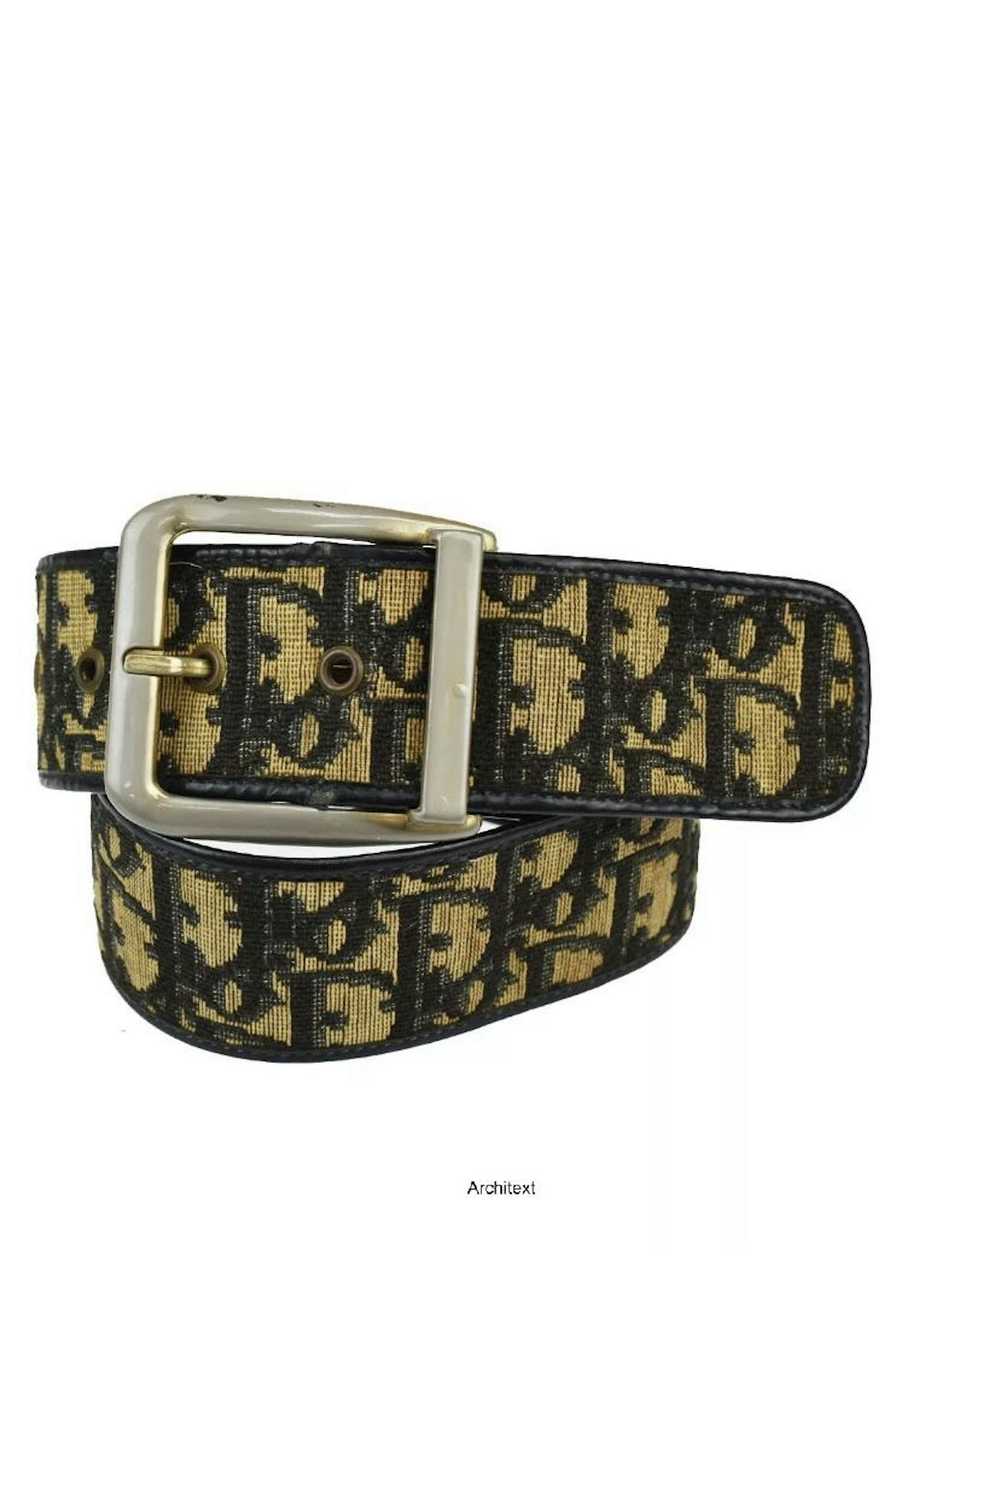 Dior Monogram Belt - image 1